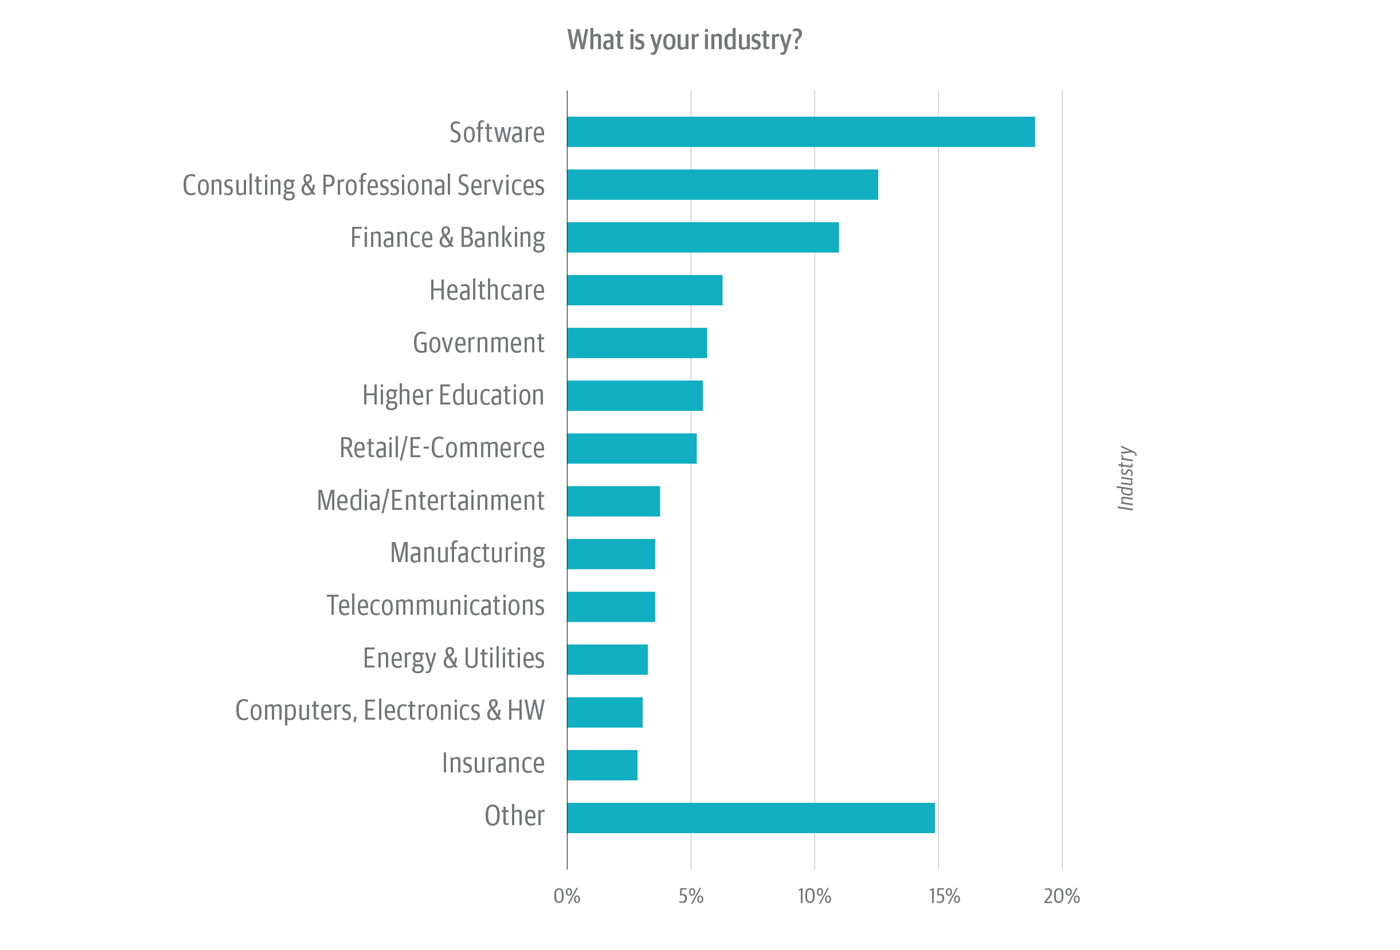 Industries of survey respondents